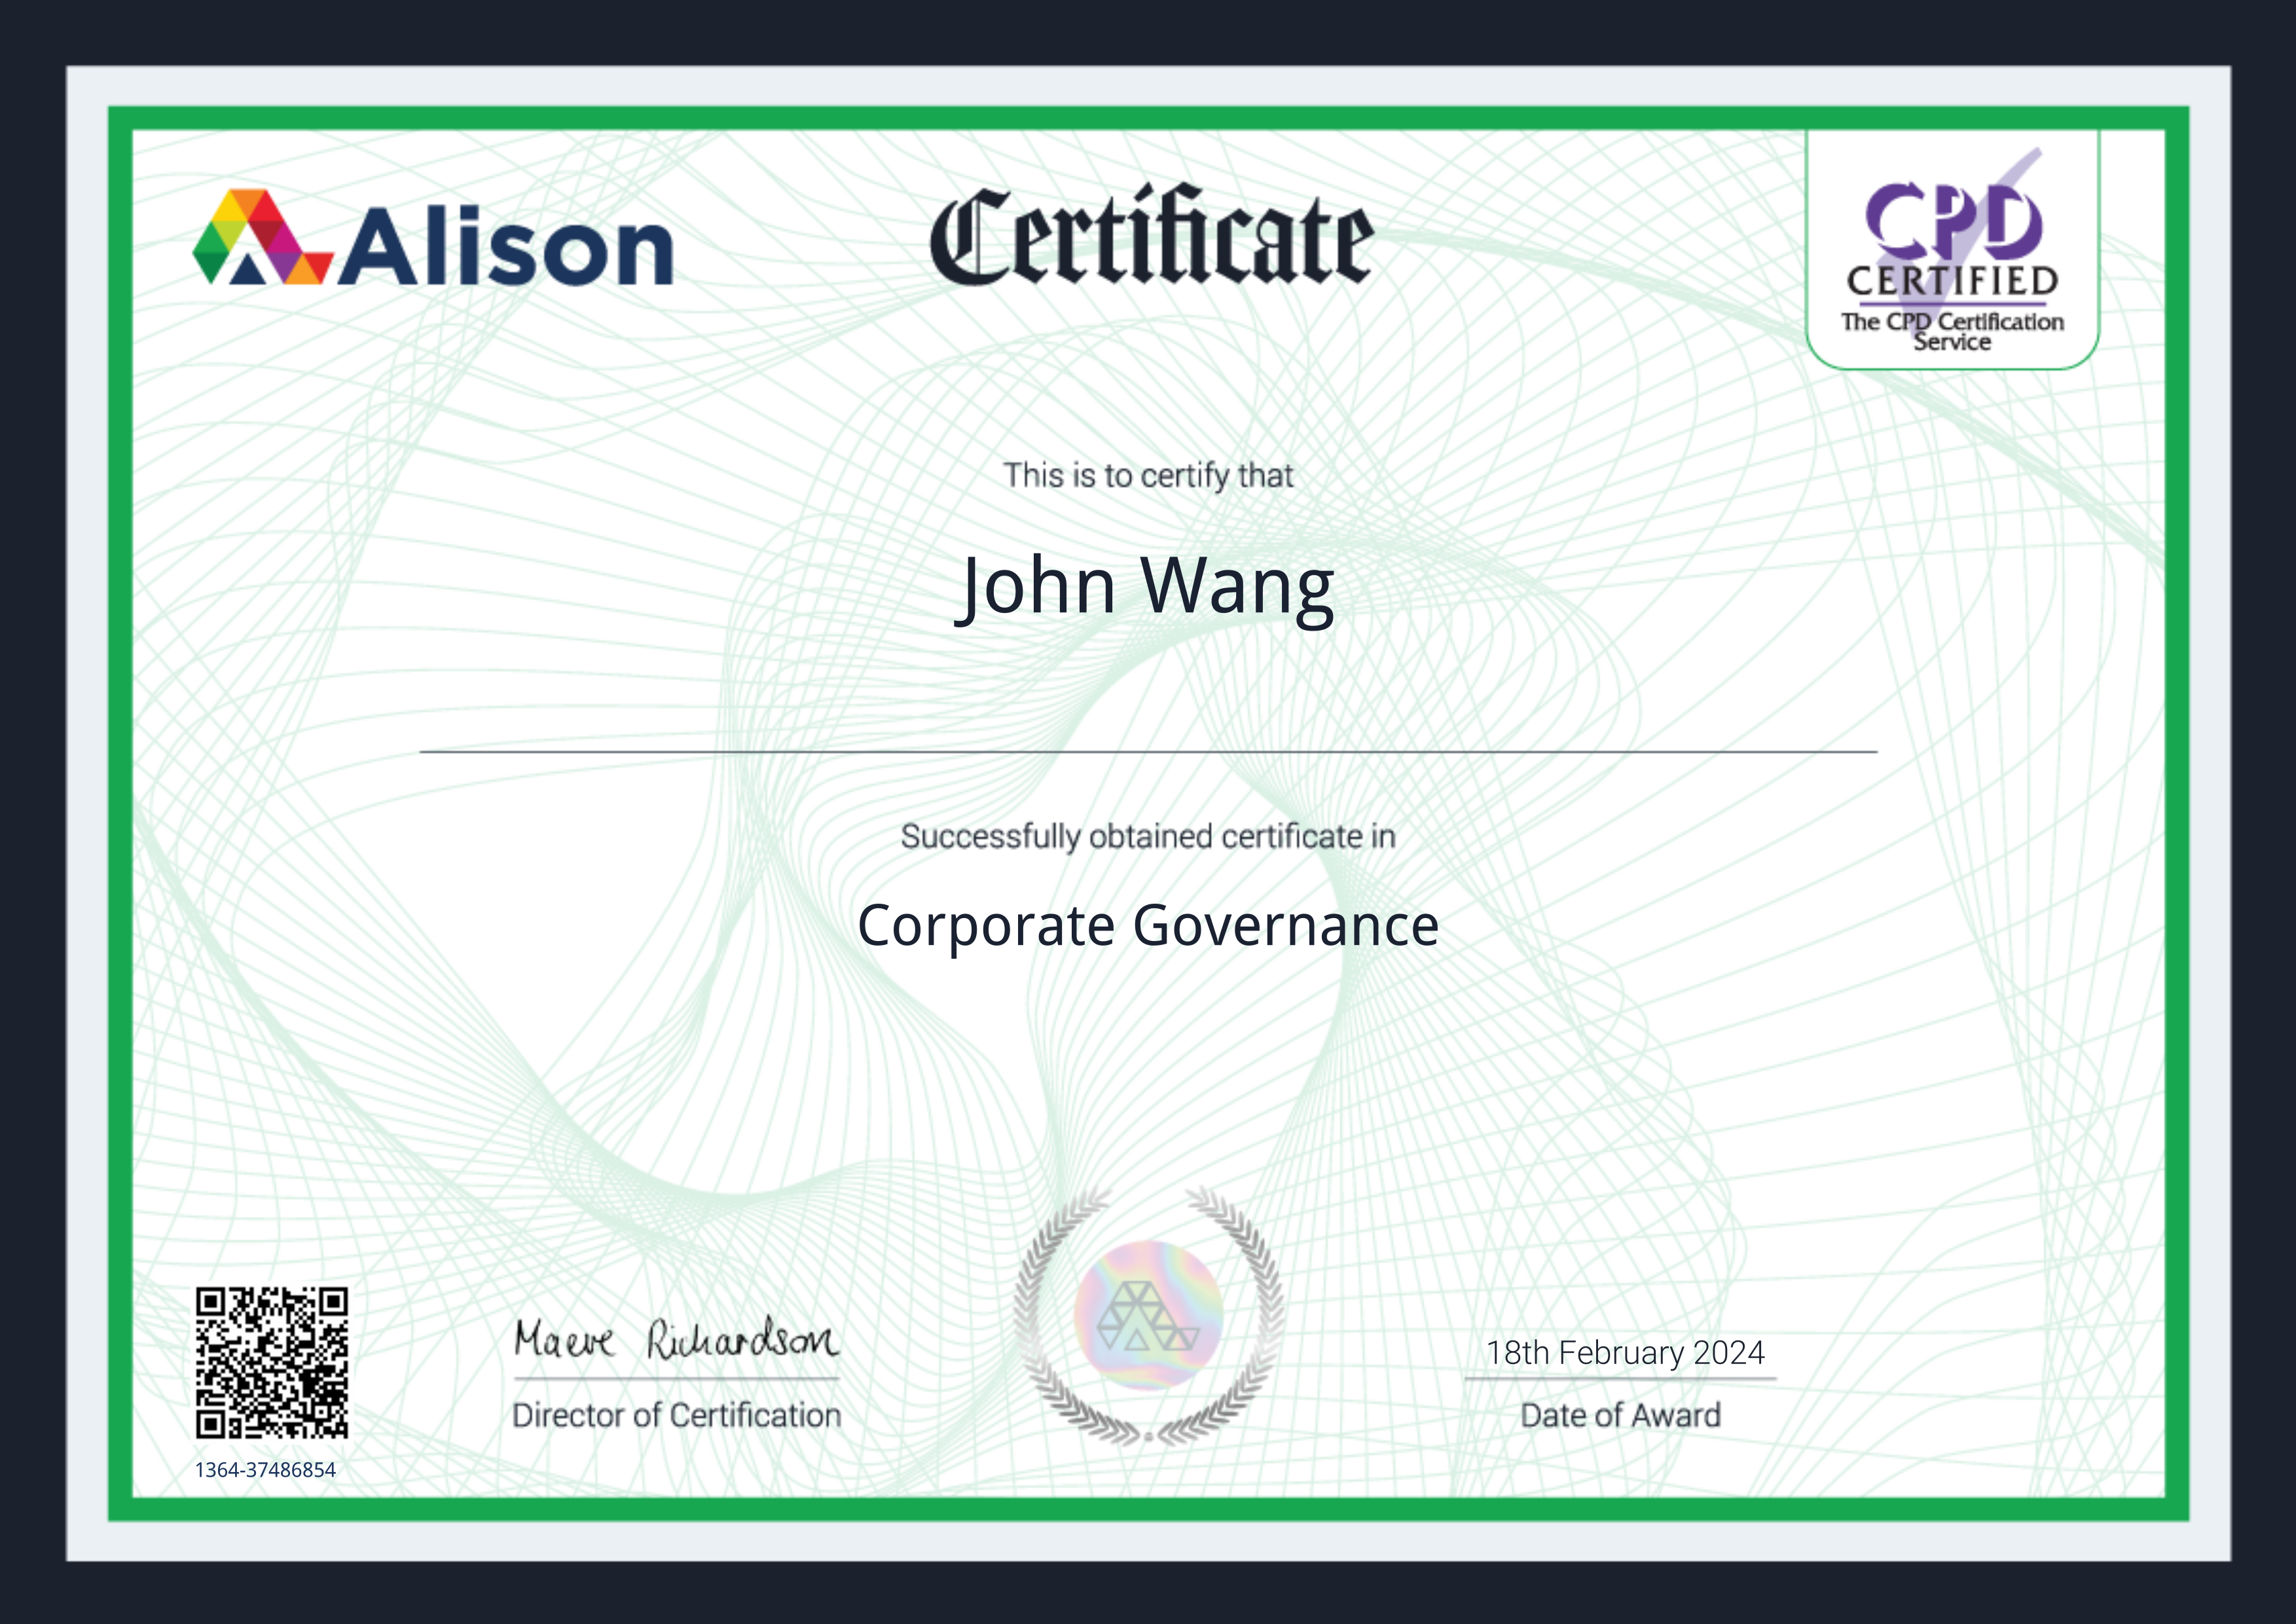 John's Corporate Governance Certificate from Alison by Robert Klonoski